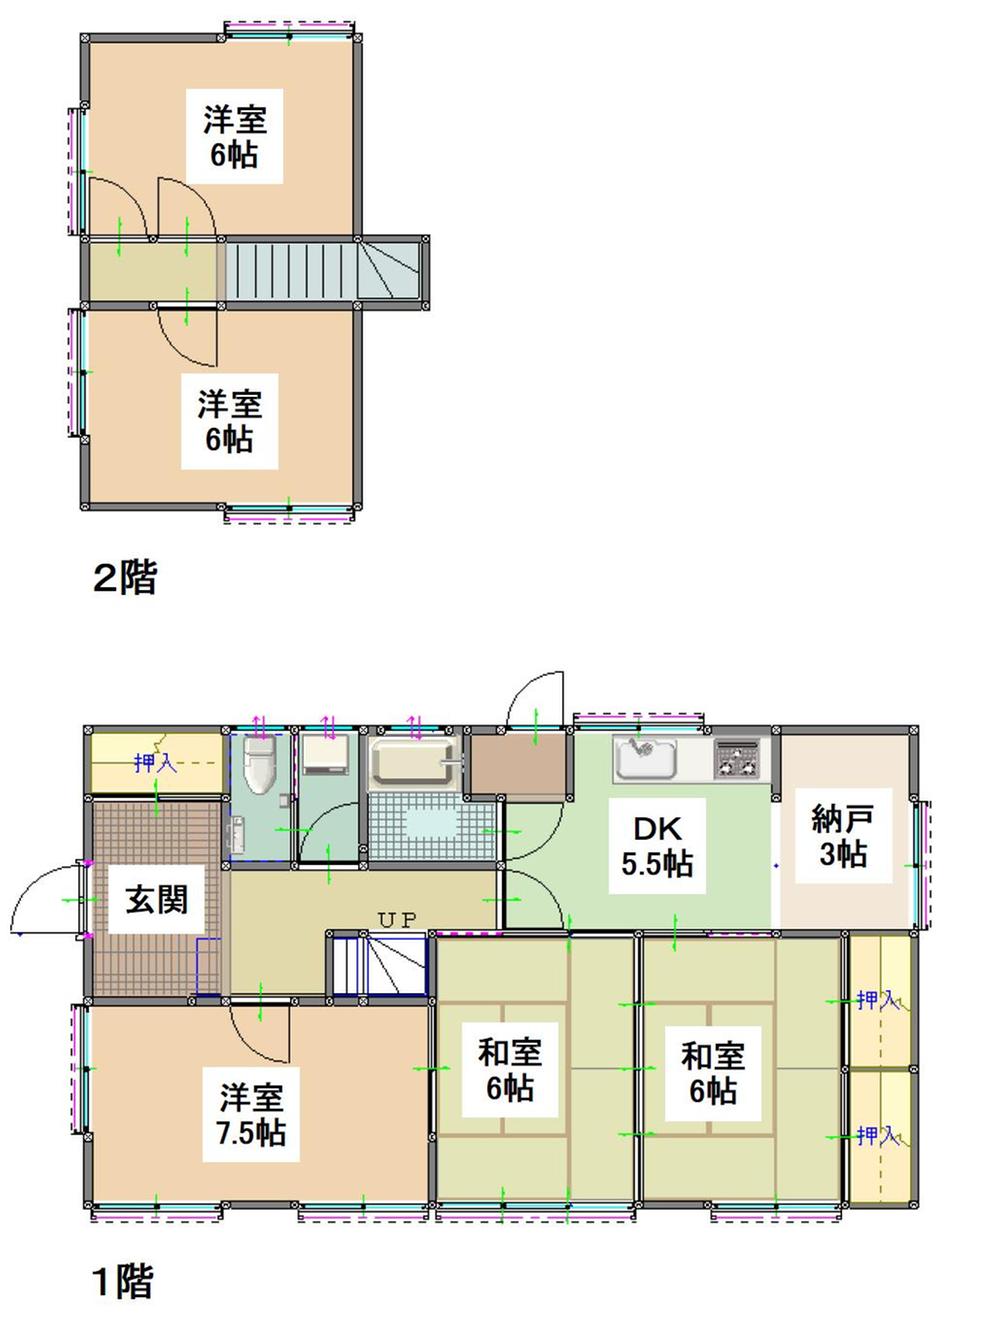 Floor plan. 6.5 million yen, 5DK + S (storeroom), Land area 202.8 sq m , Building area 93.57 sq m 5DK + closet is with space